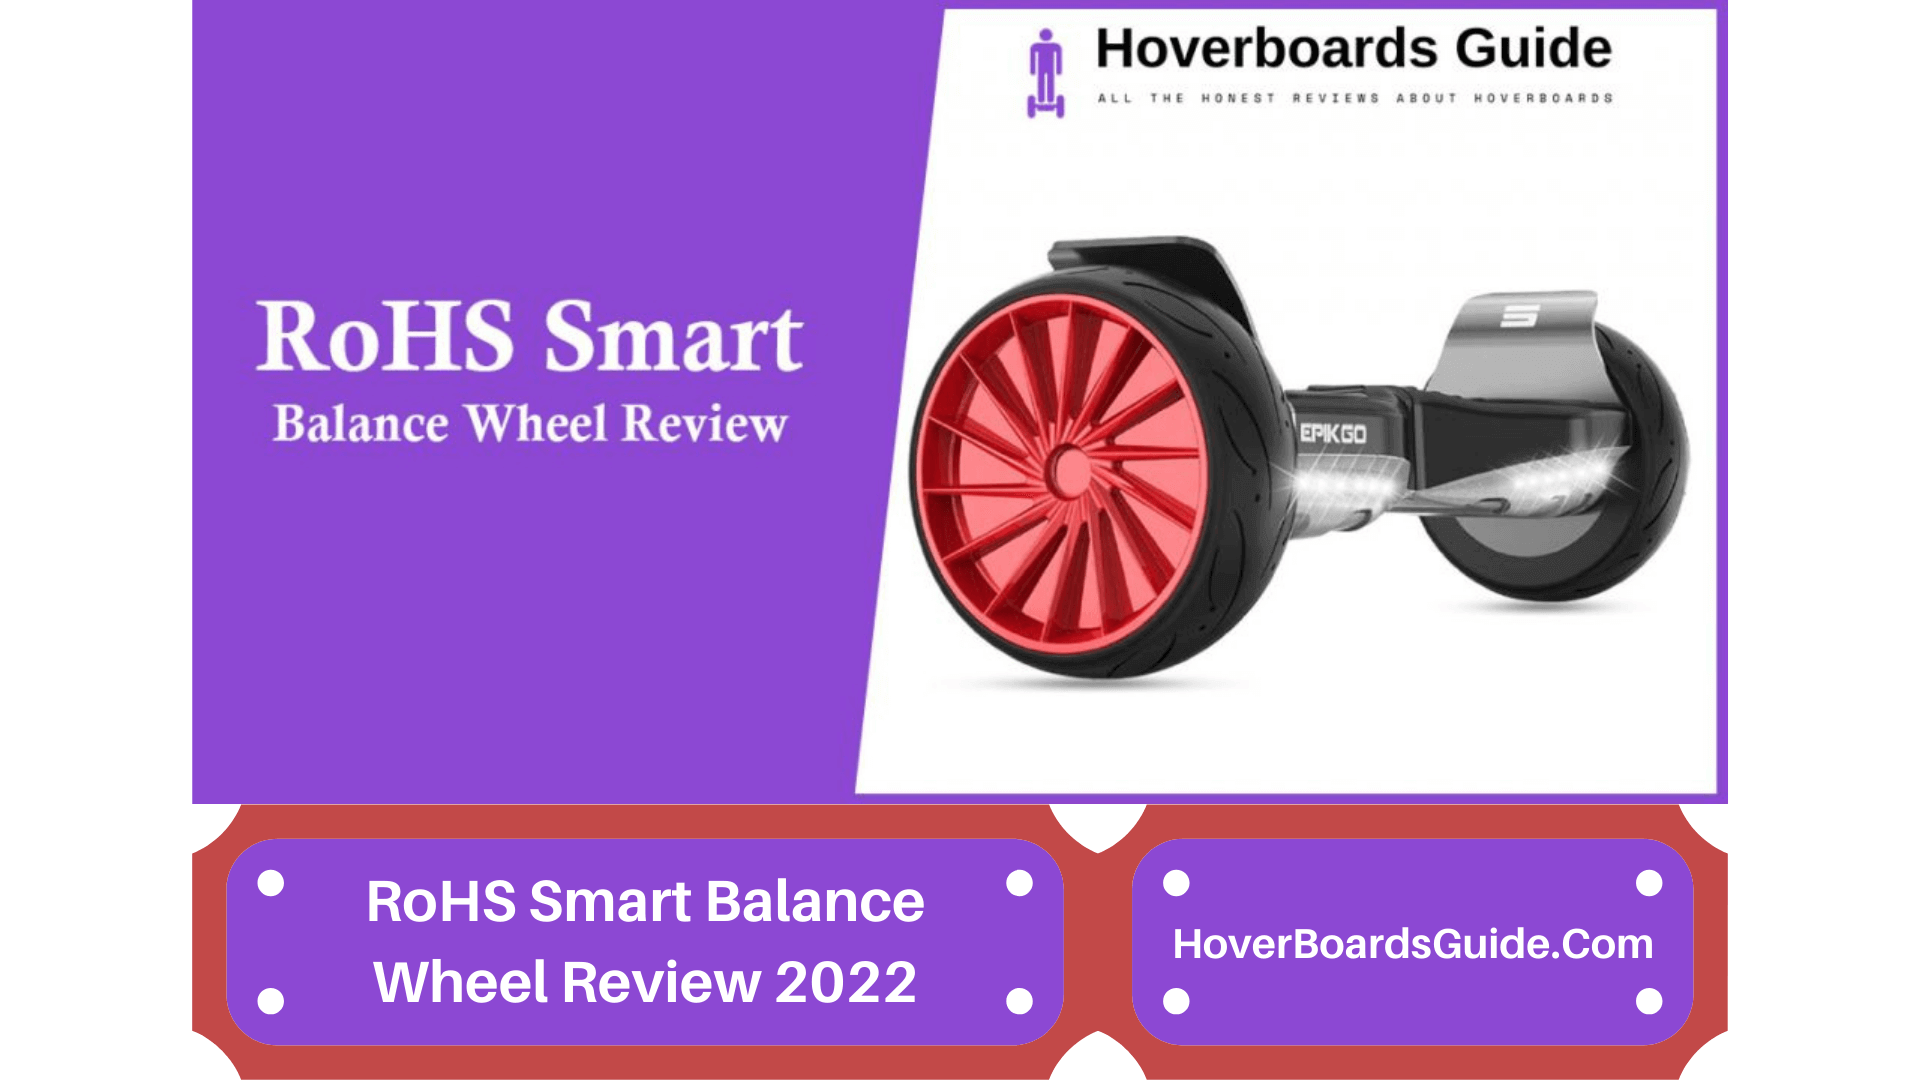 RoHS Smart Balance Wheel Review 2022